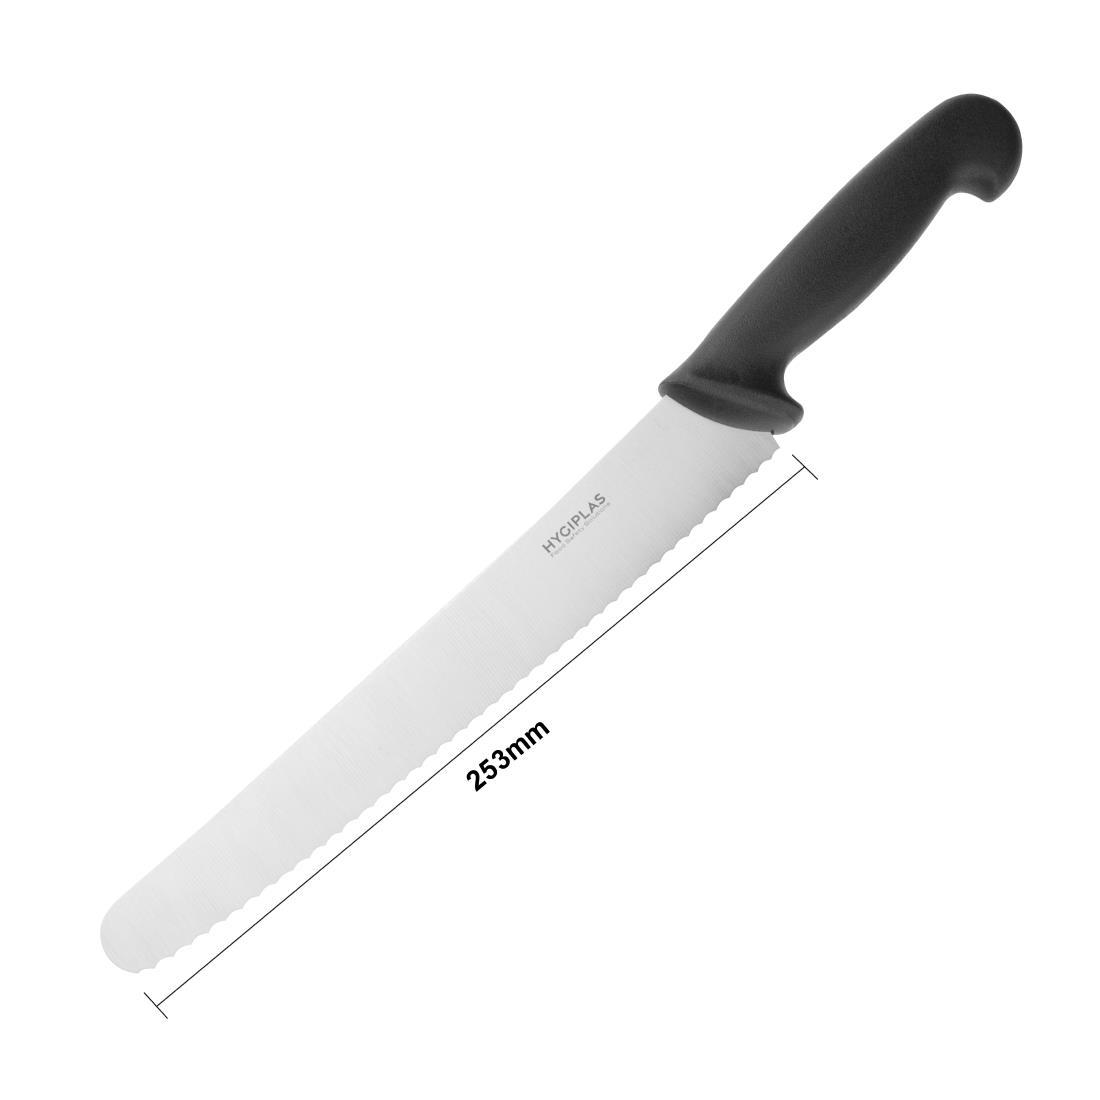 Hygiplas Serrated Pastry Knife Black 25.5cm - CF895  - 5